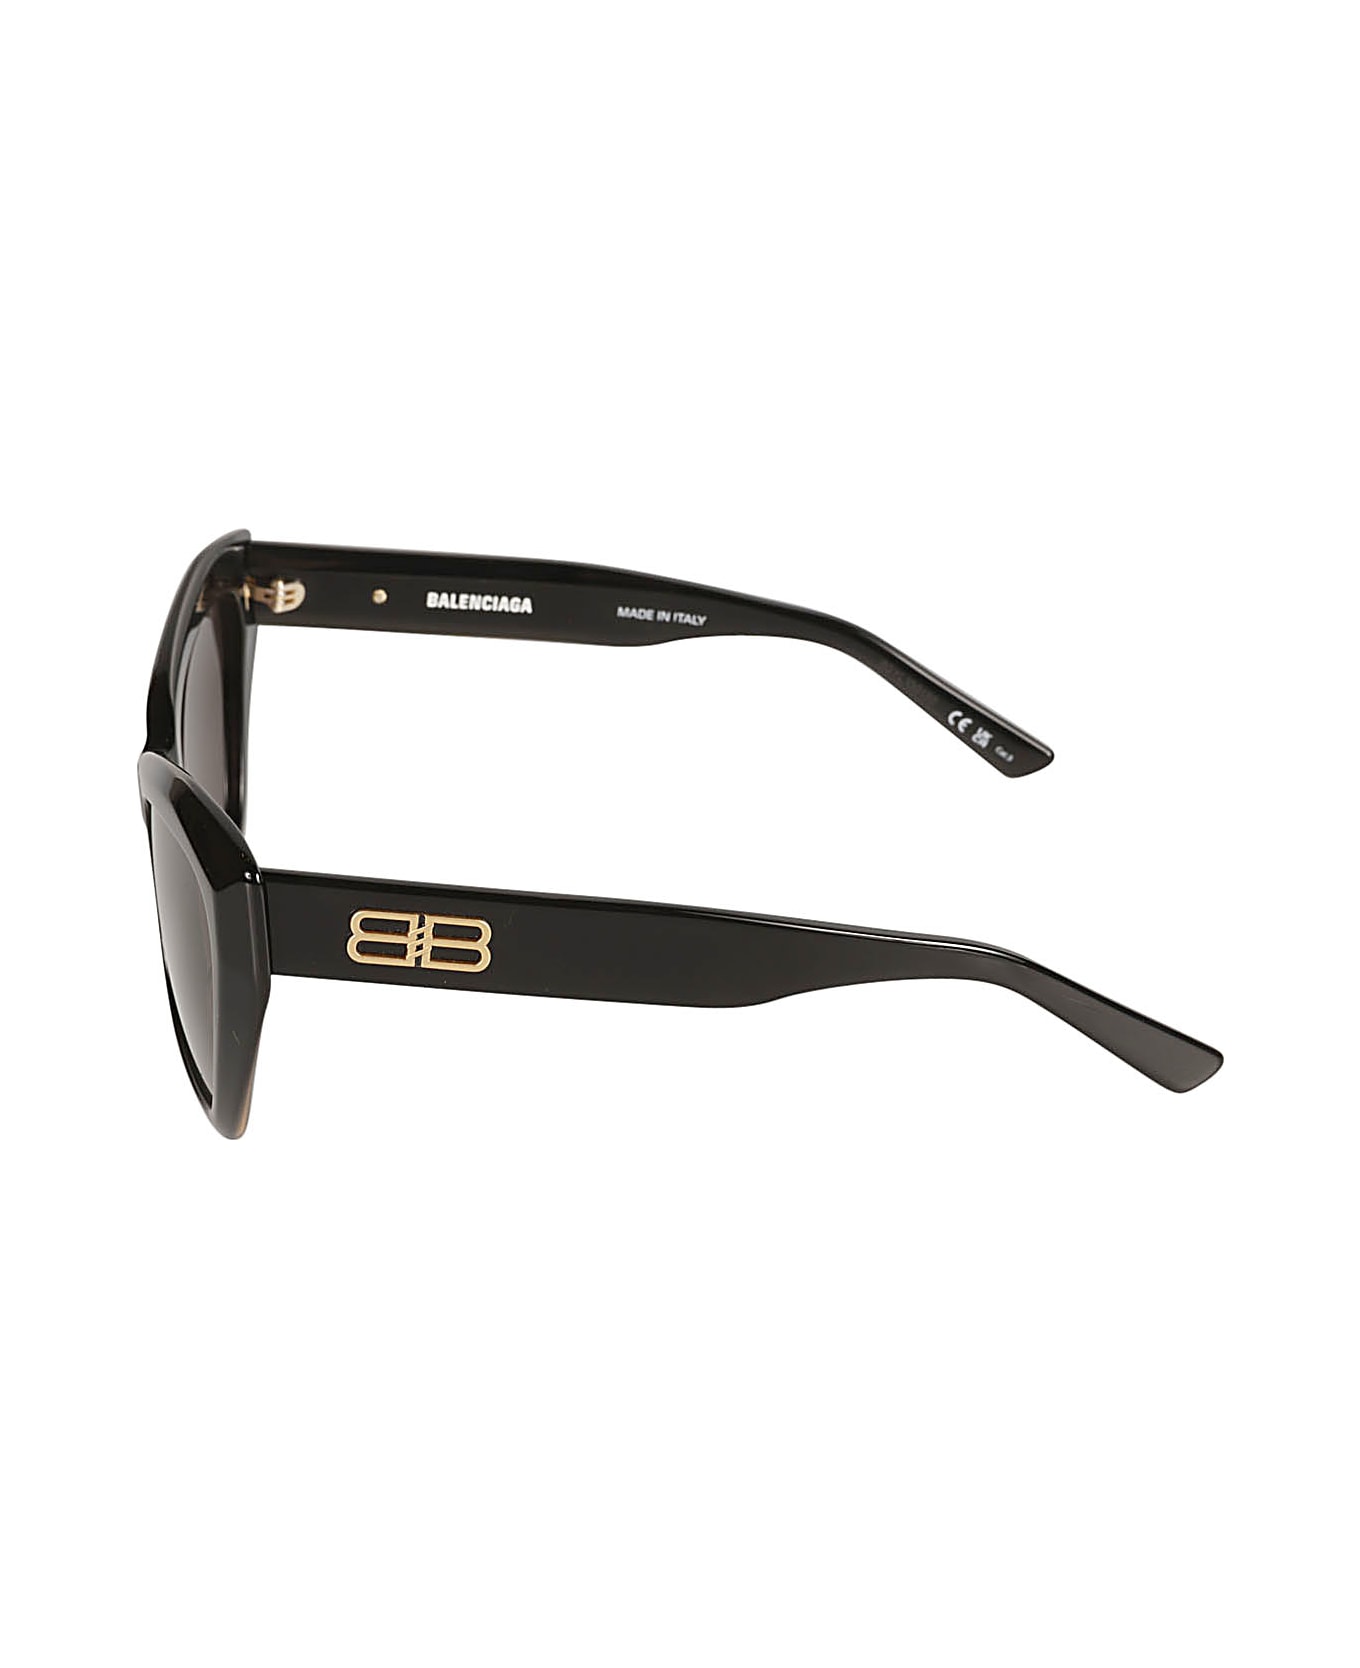 Balenciaga Eyewear Butterfly Frame Bb Plaque Sunglasses - Black/Grey サングラス